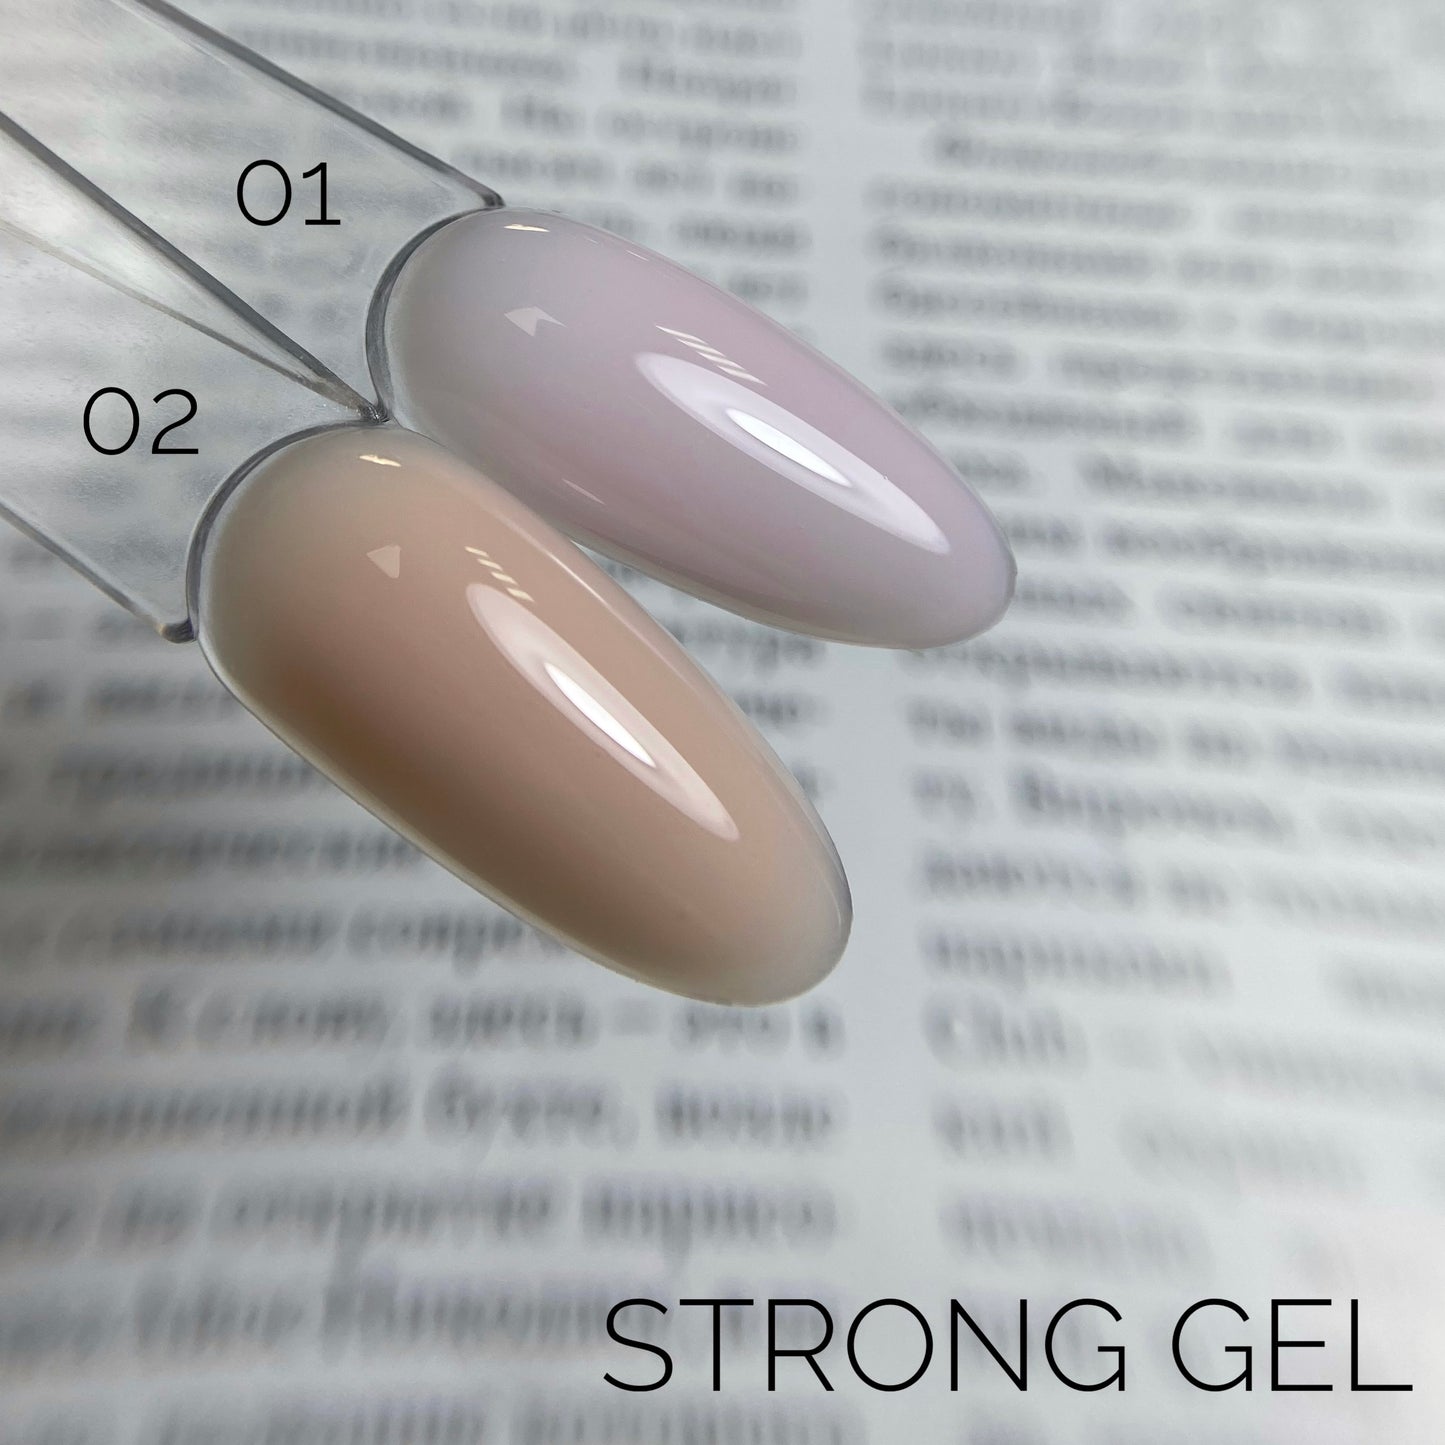 GRANI Strong Gel #02 (15ml) 100% gel